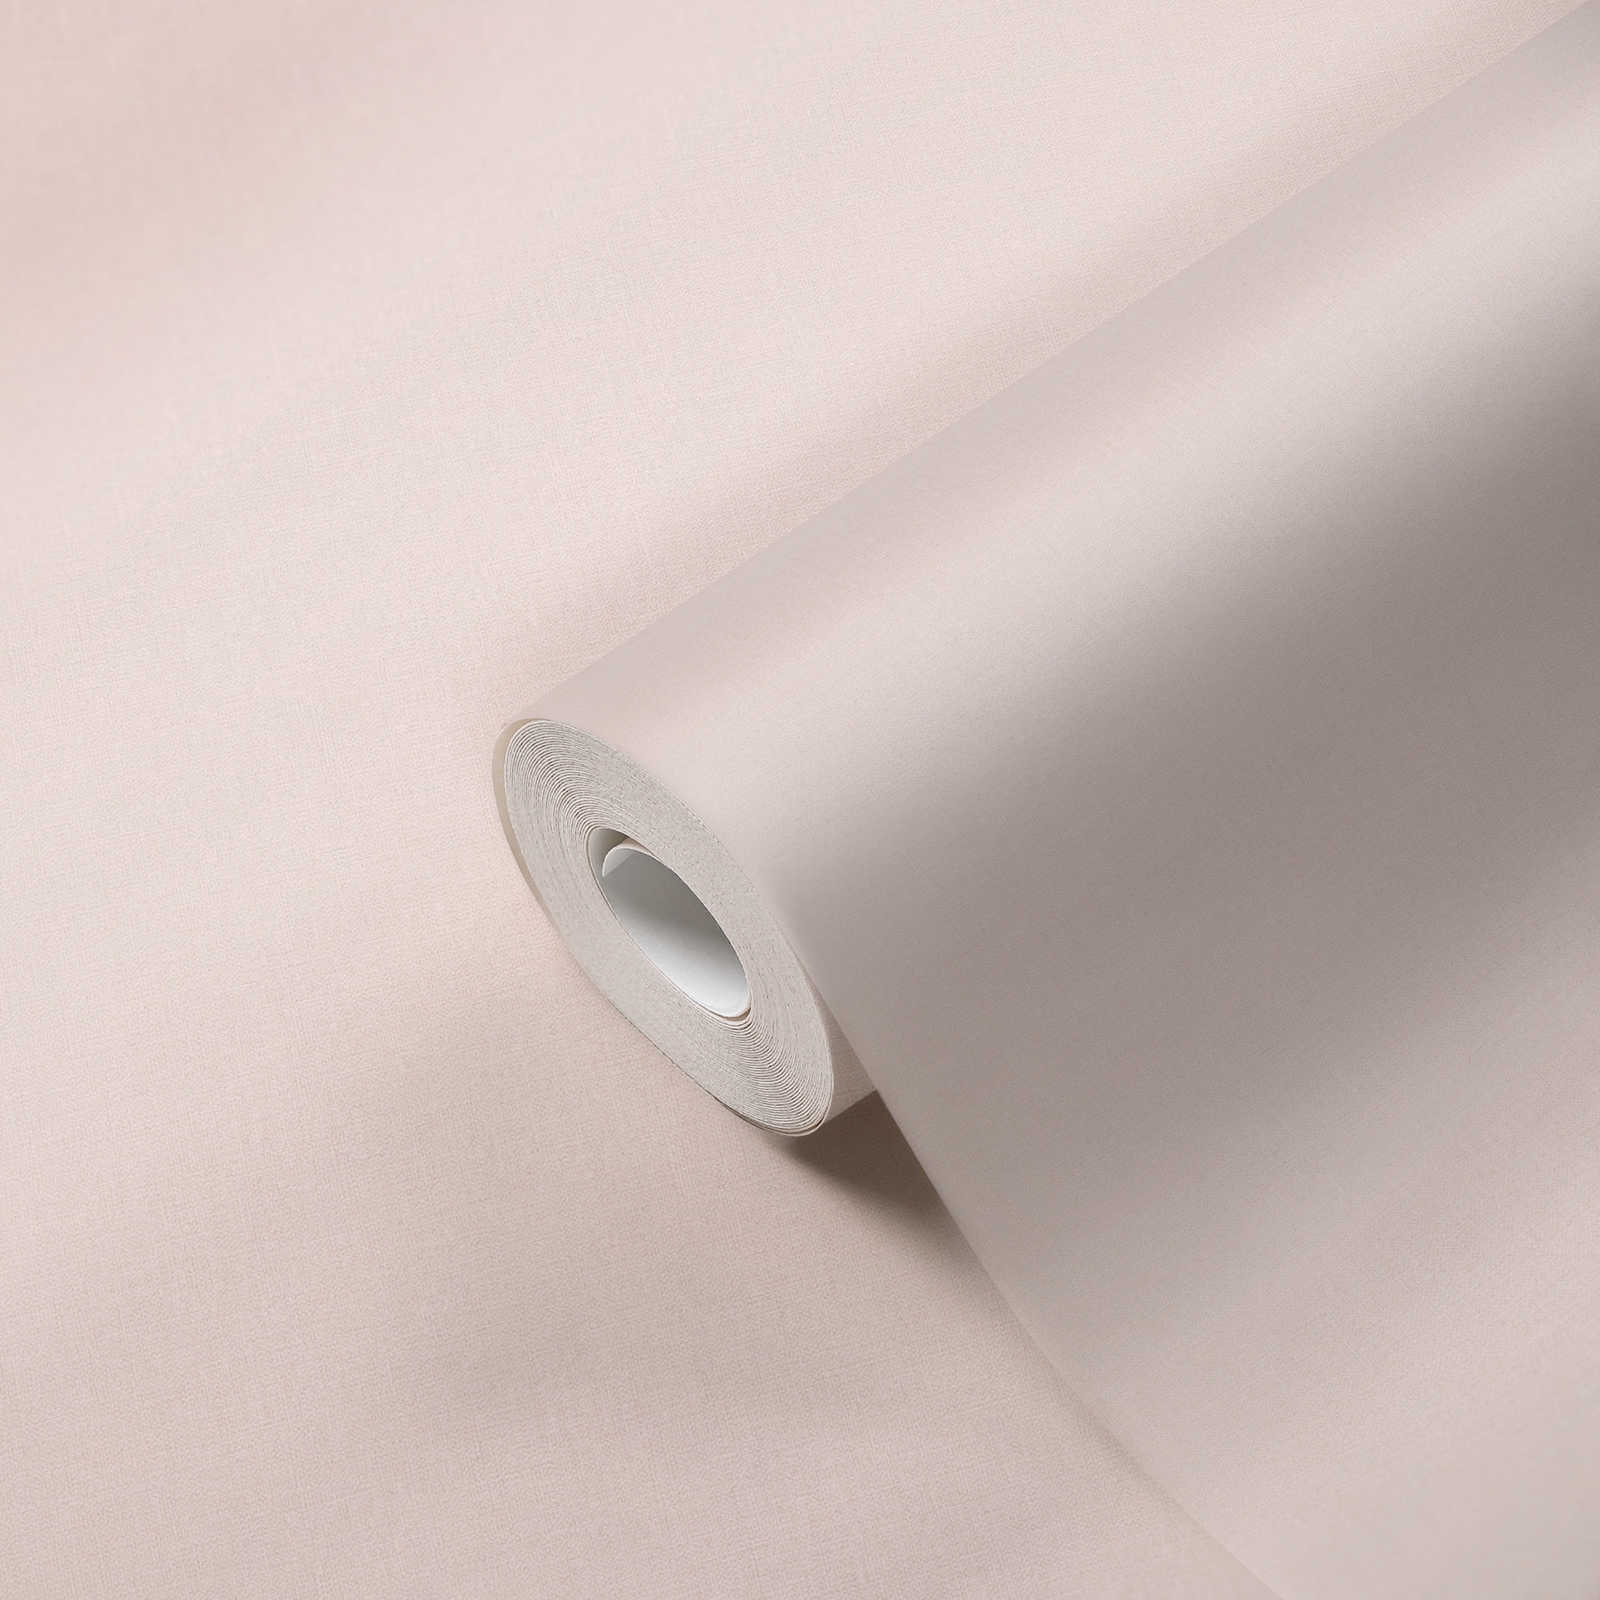             Plain wallpaper with a light textured look - pink
        